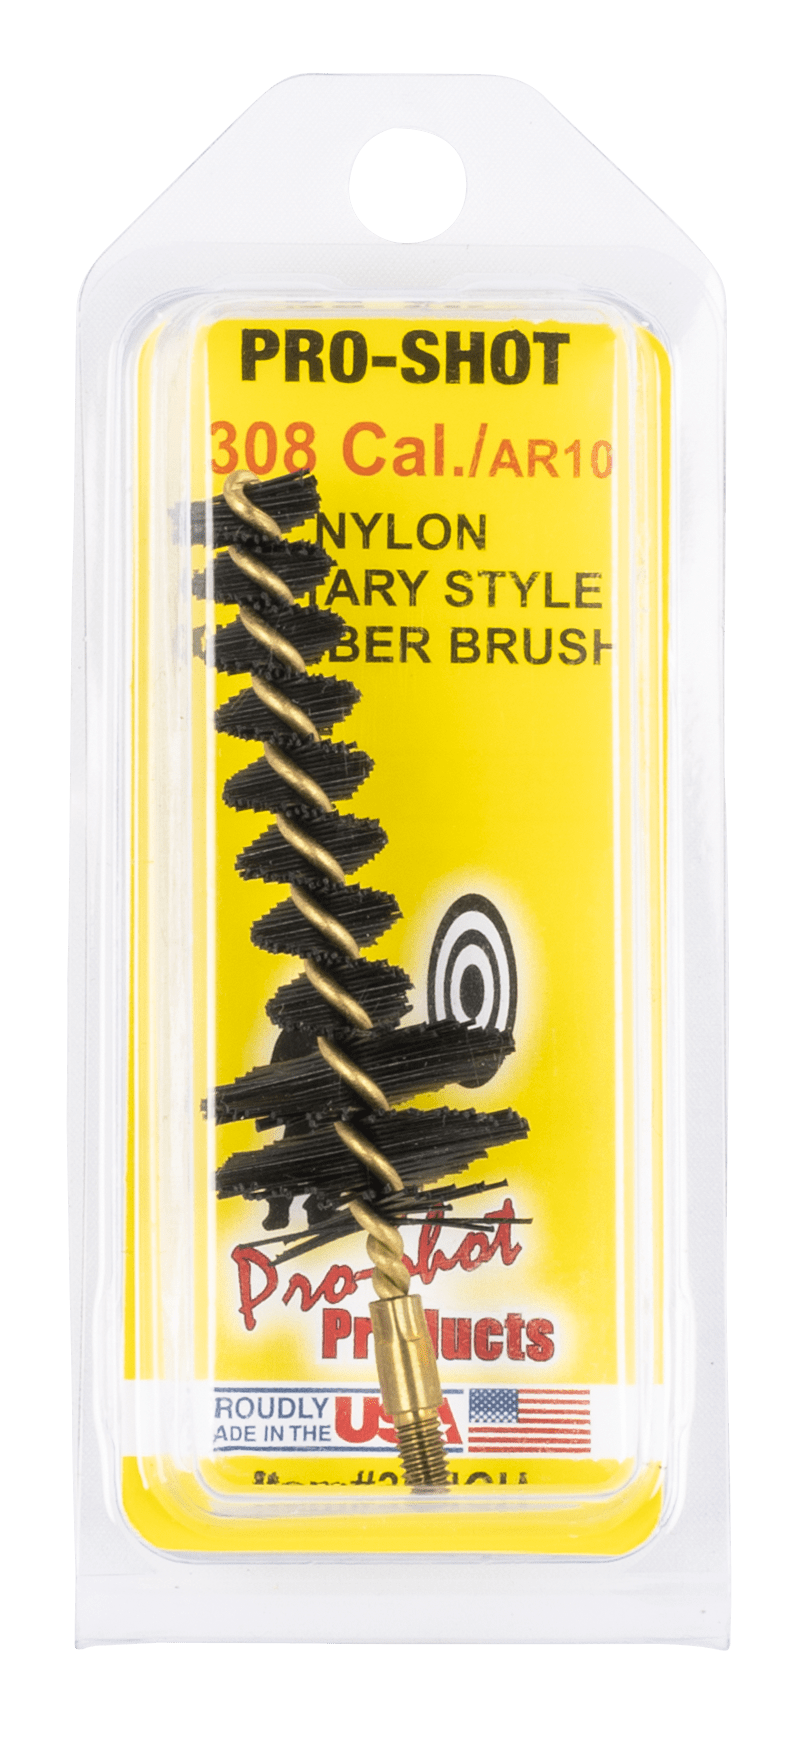 Pro-Shot Products Pro-shot Nylon Chamber Brush Ar-10 Cleaning Equipment